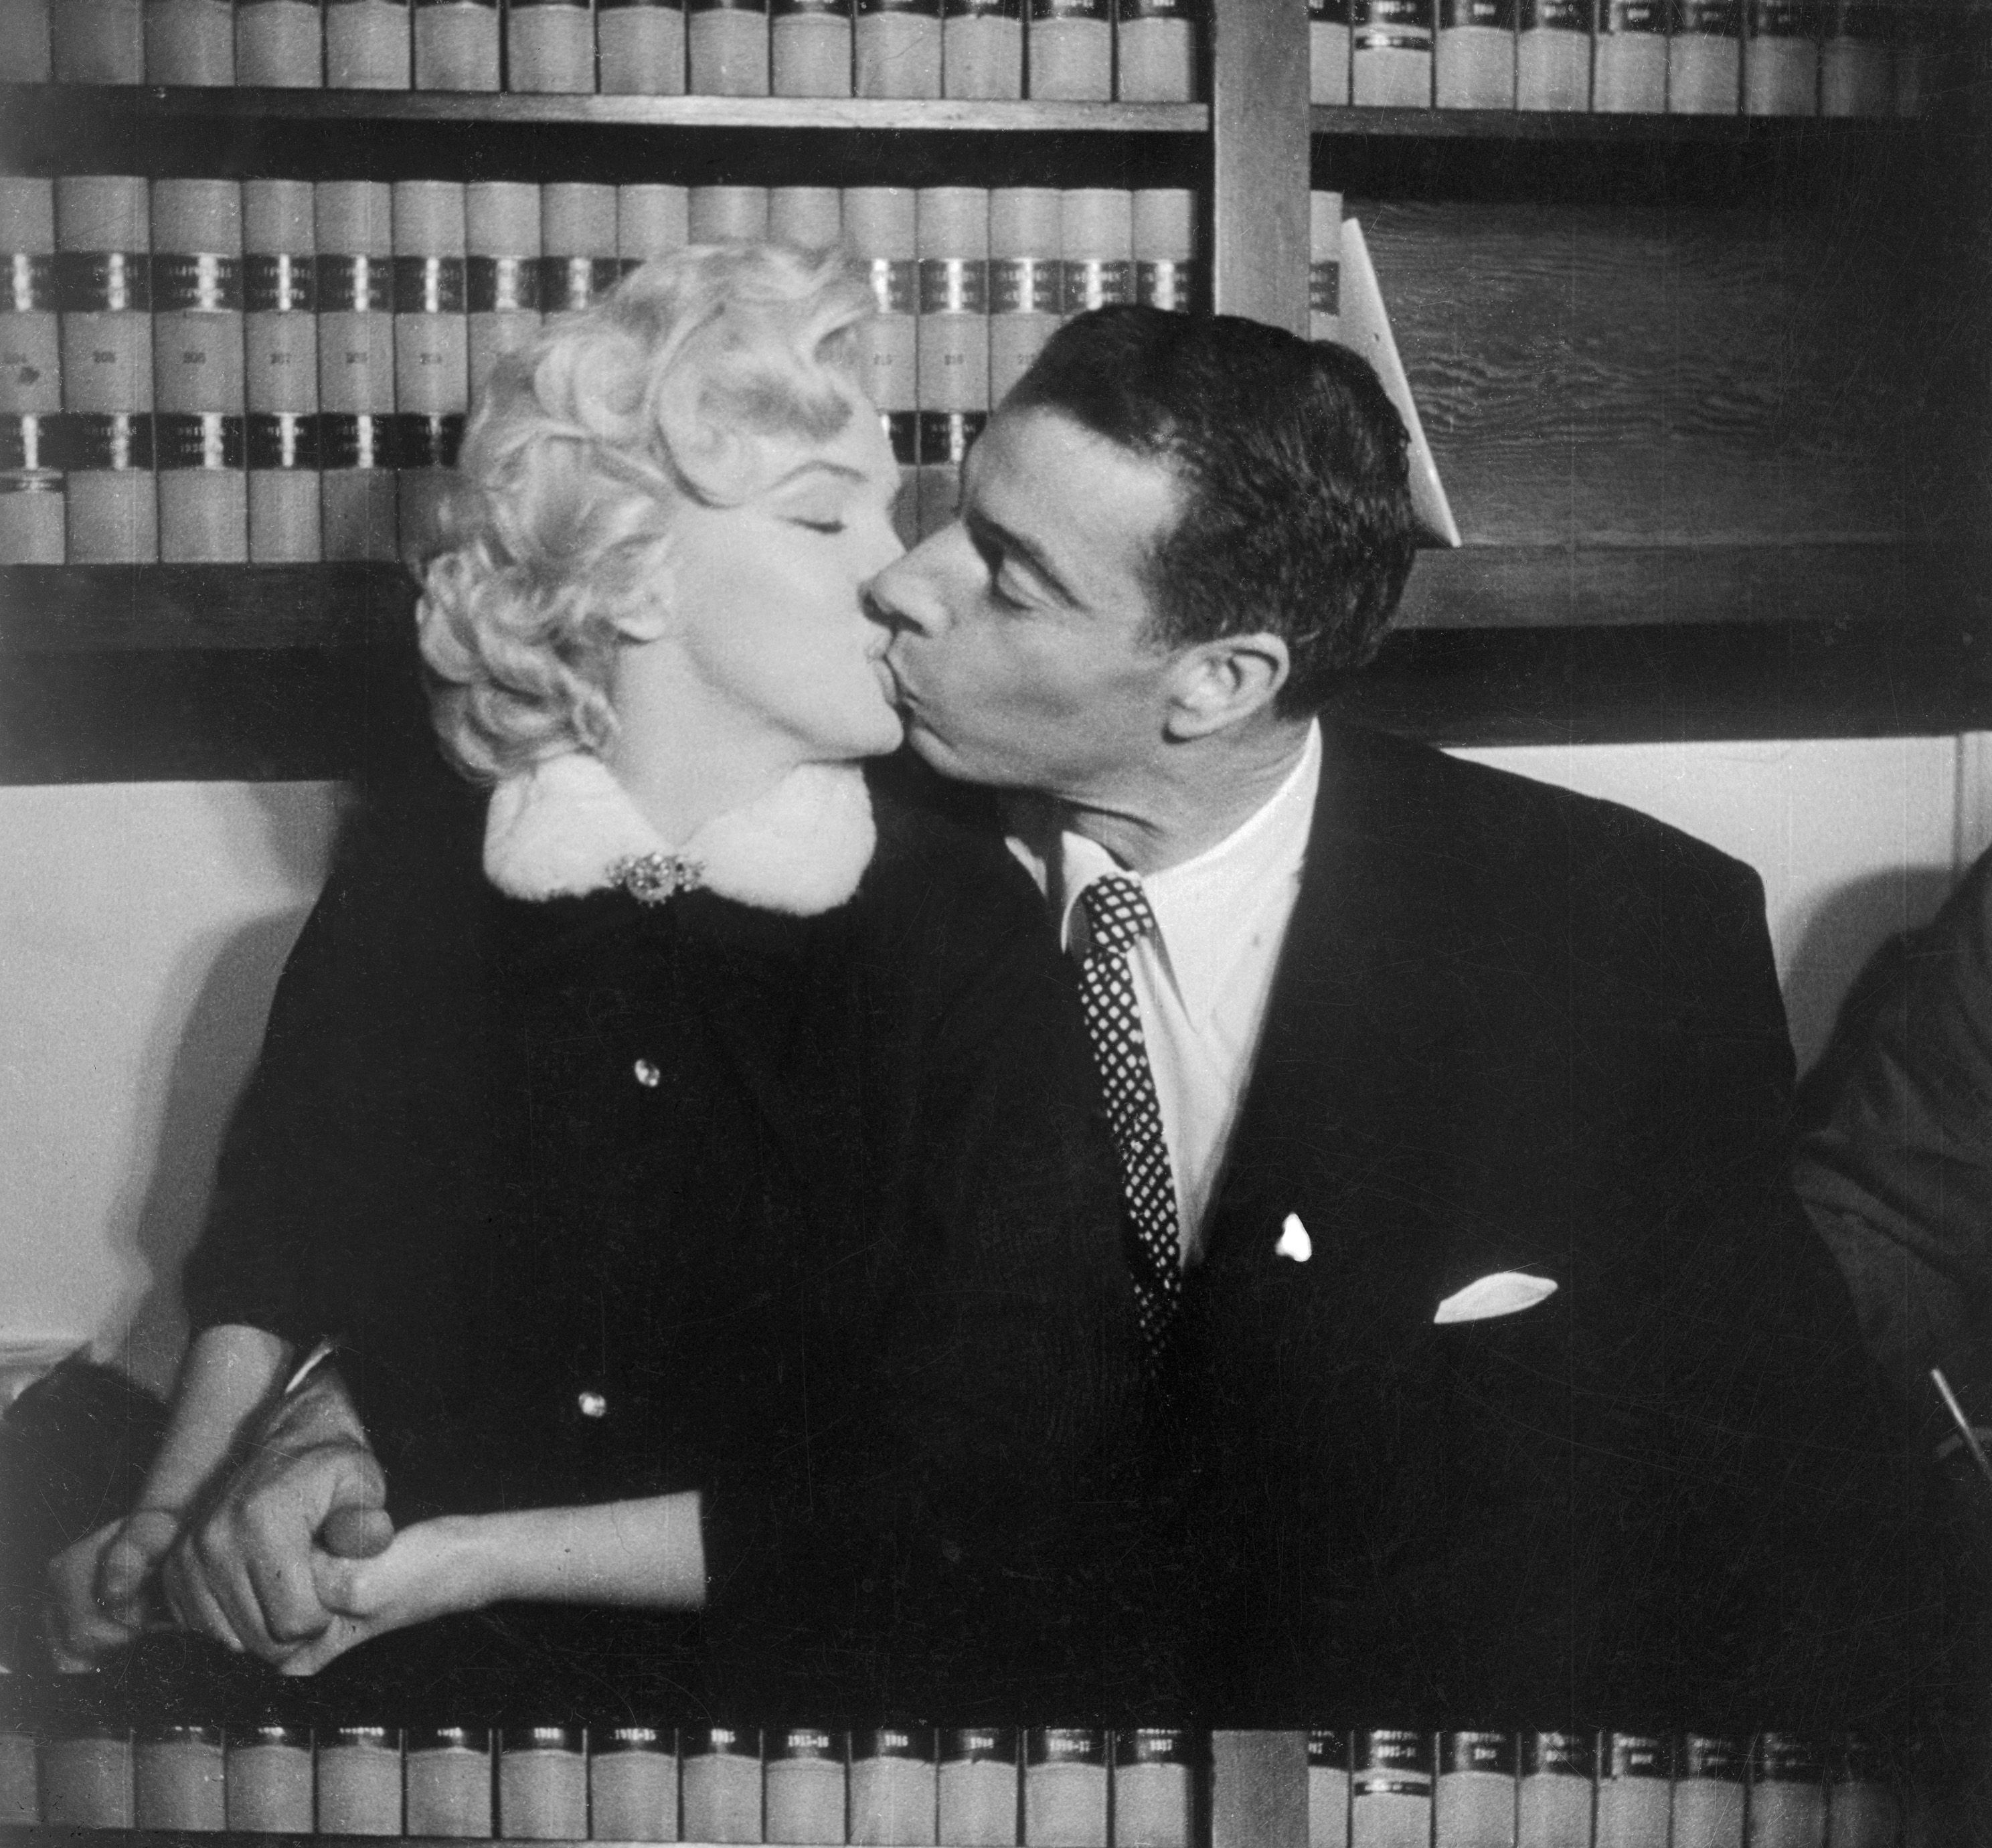 Eik Wat is er mis Oplossen 43 Rare Photos from Marilyn Monroe's Turbulent Marriages